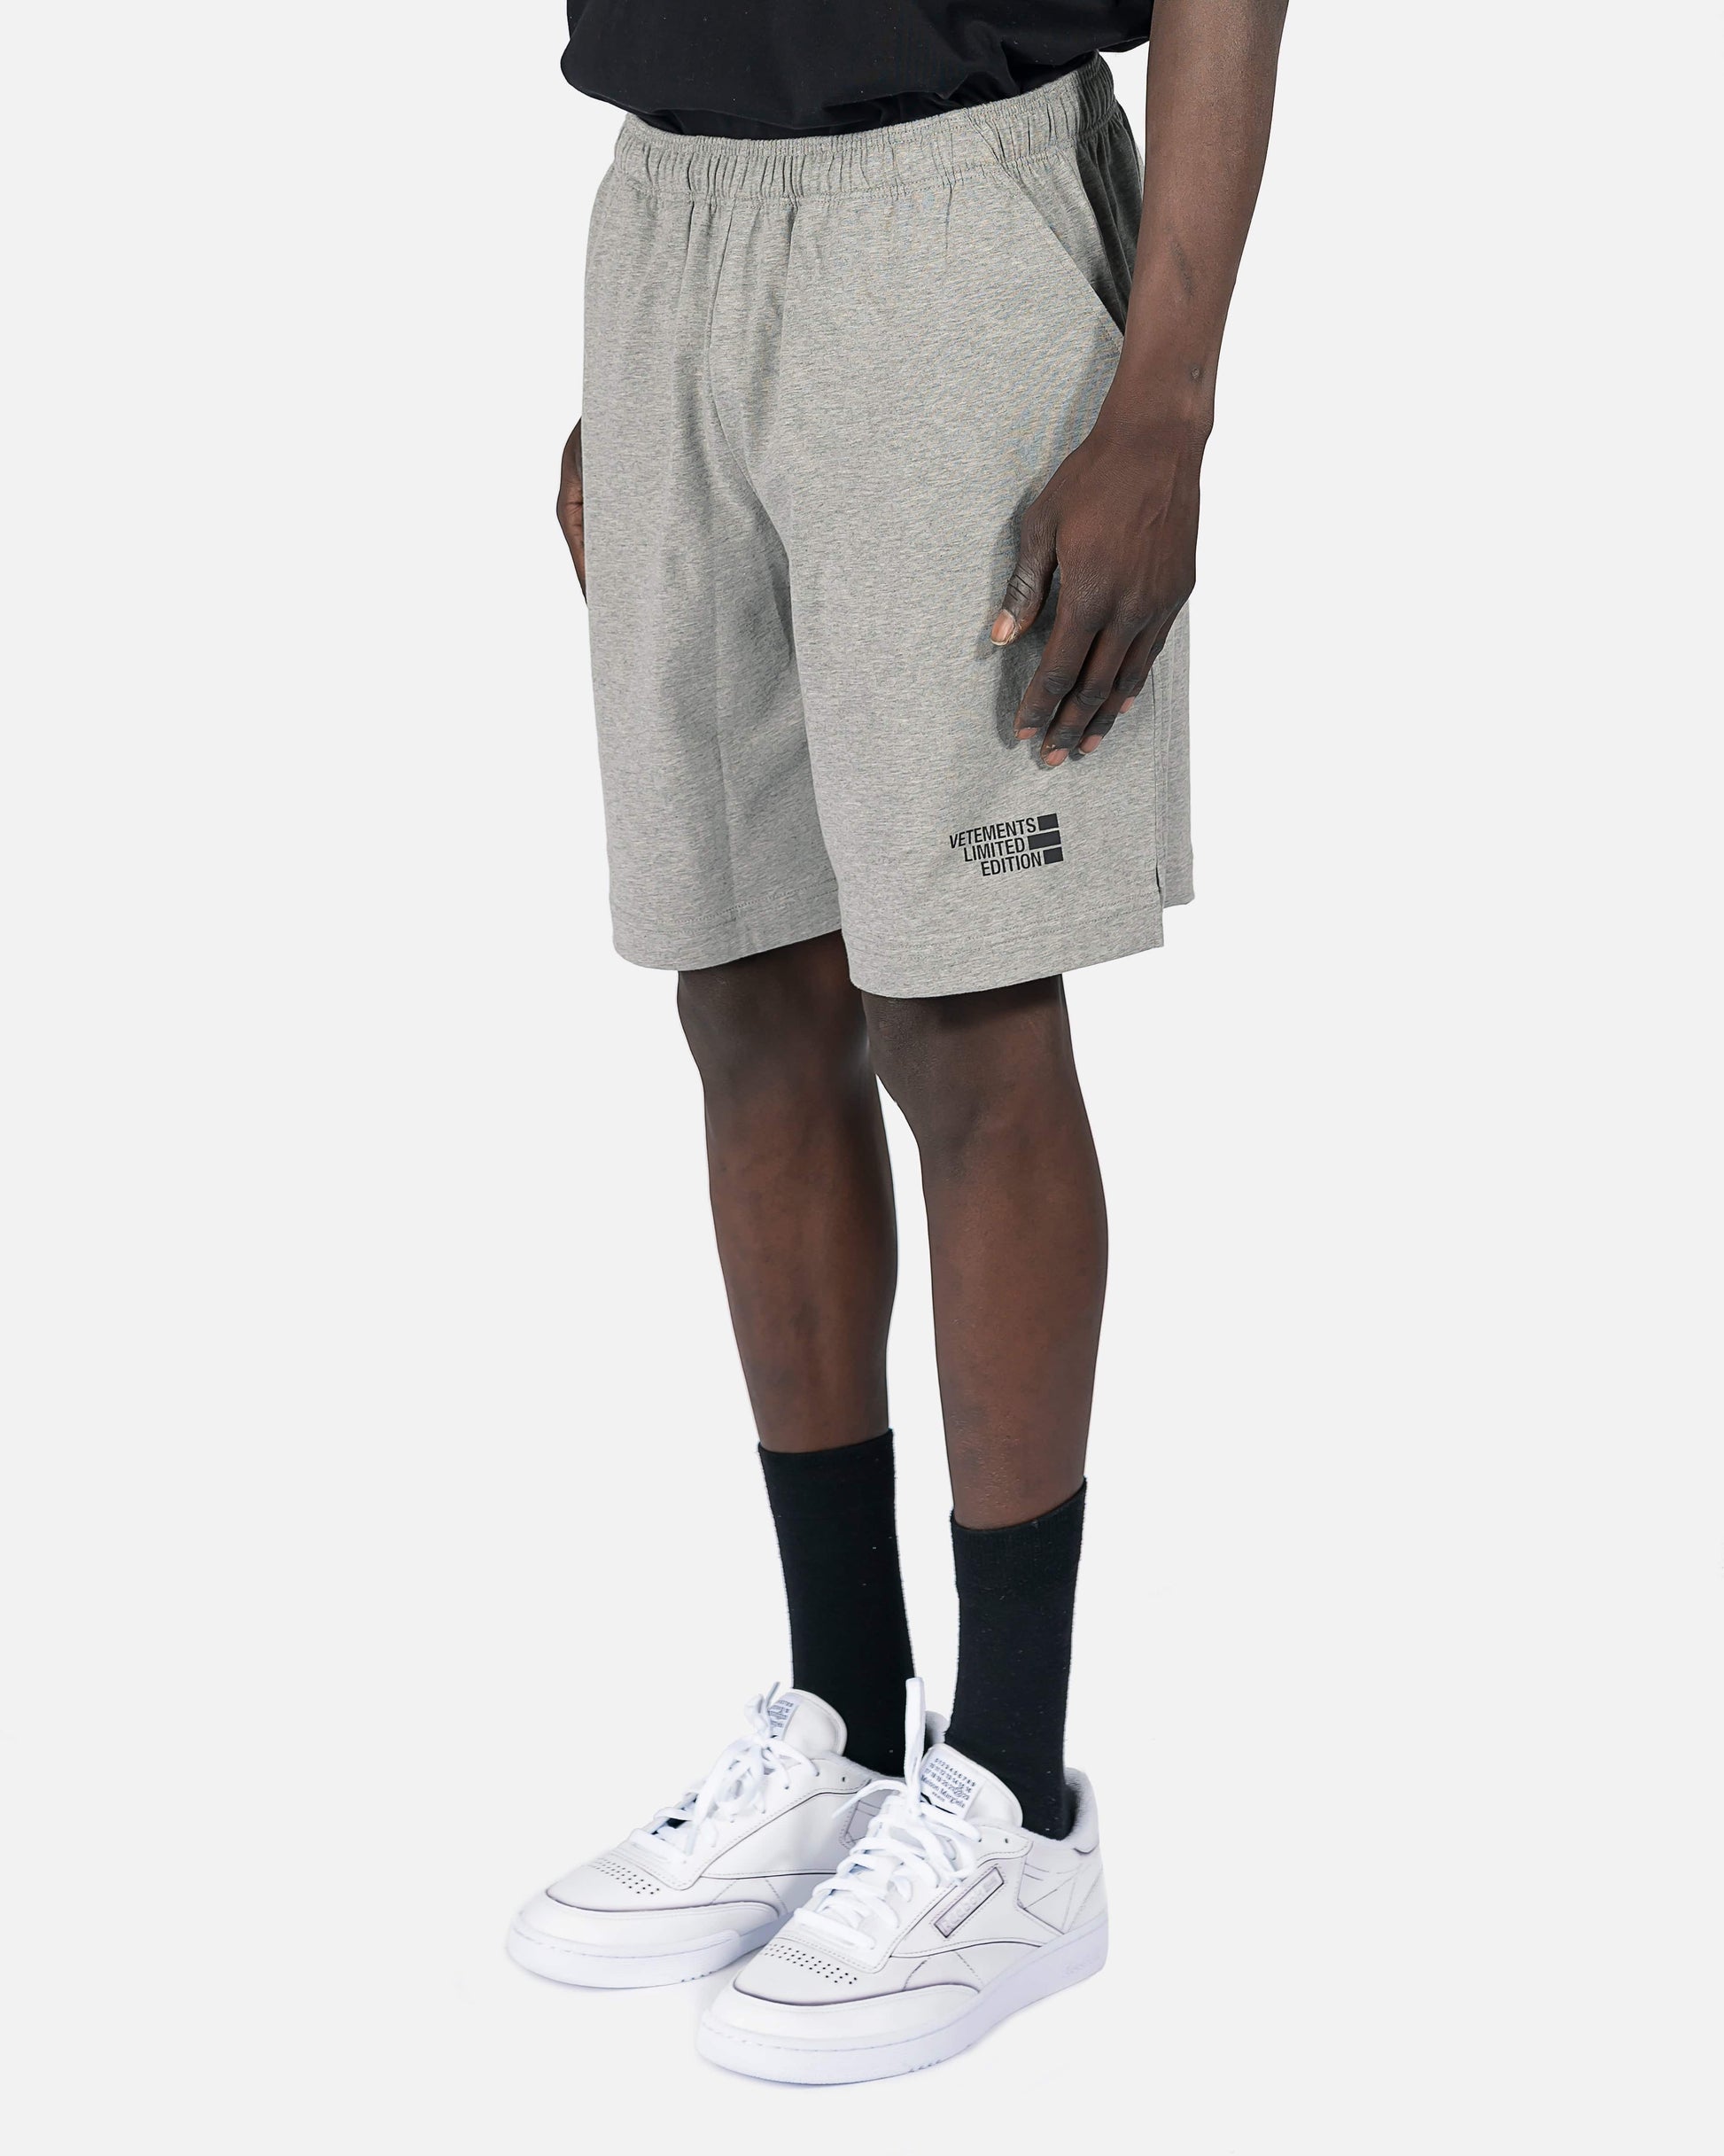 VETEMENTS Men's Shorts Limited Edition Shorts in Grey Melange